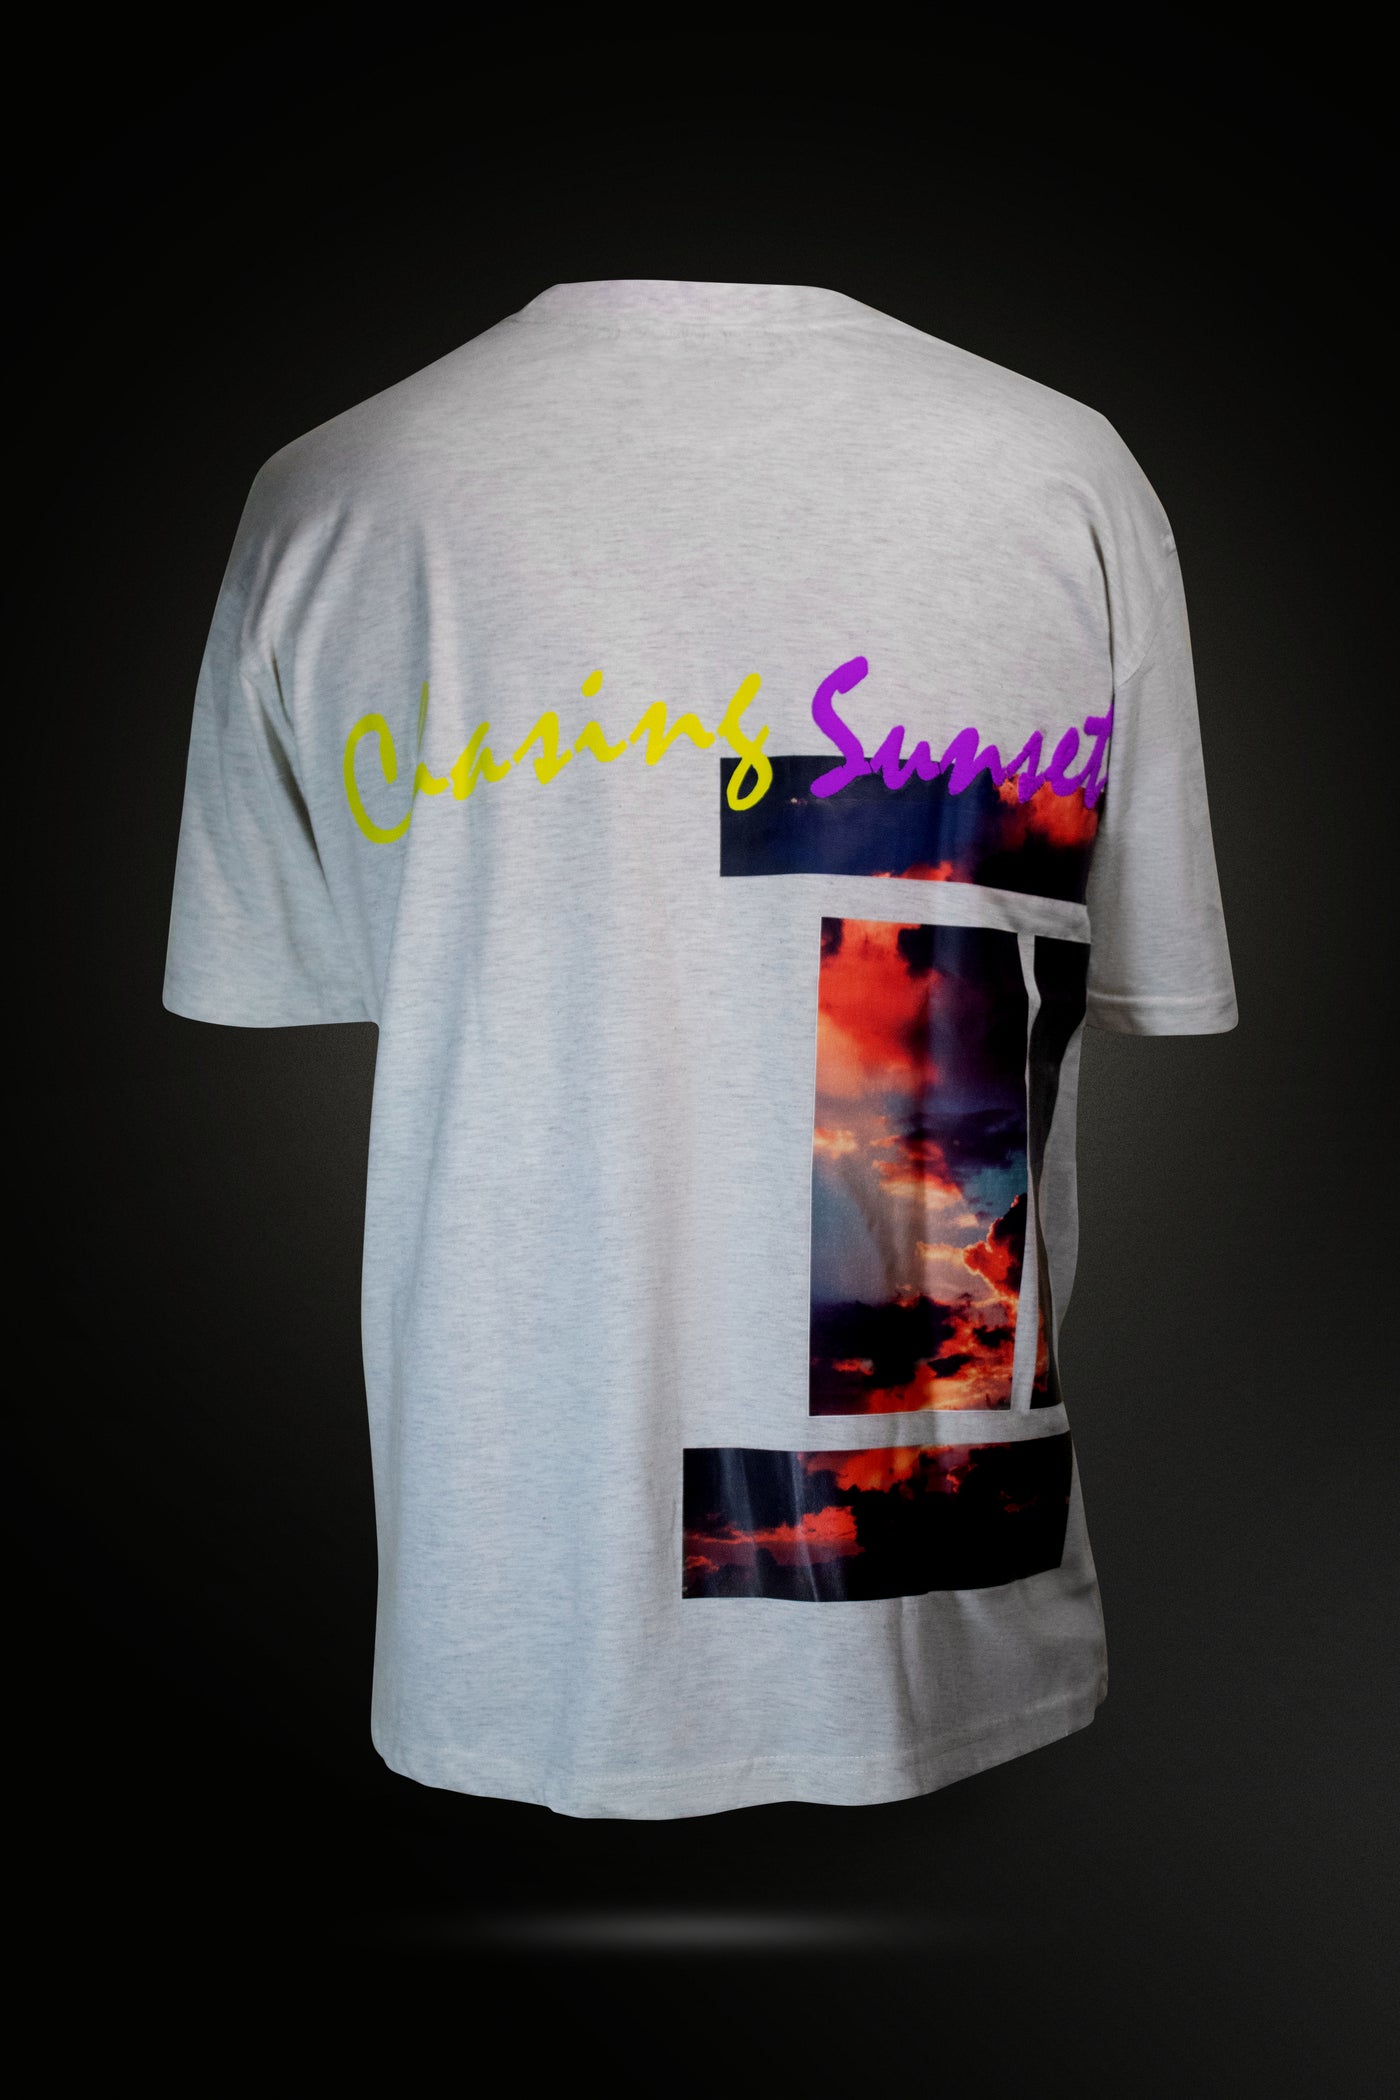 Chasing sunsets tshirt edition 1